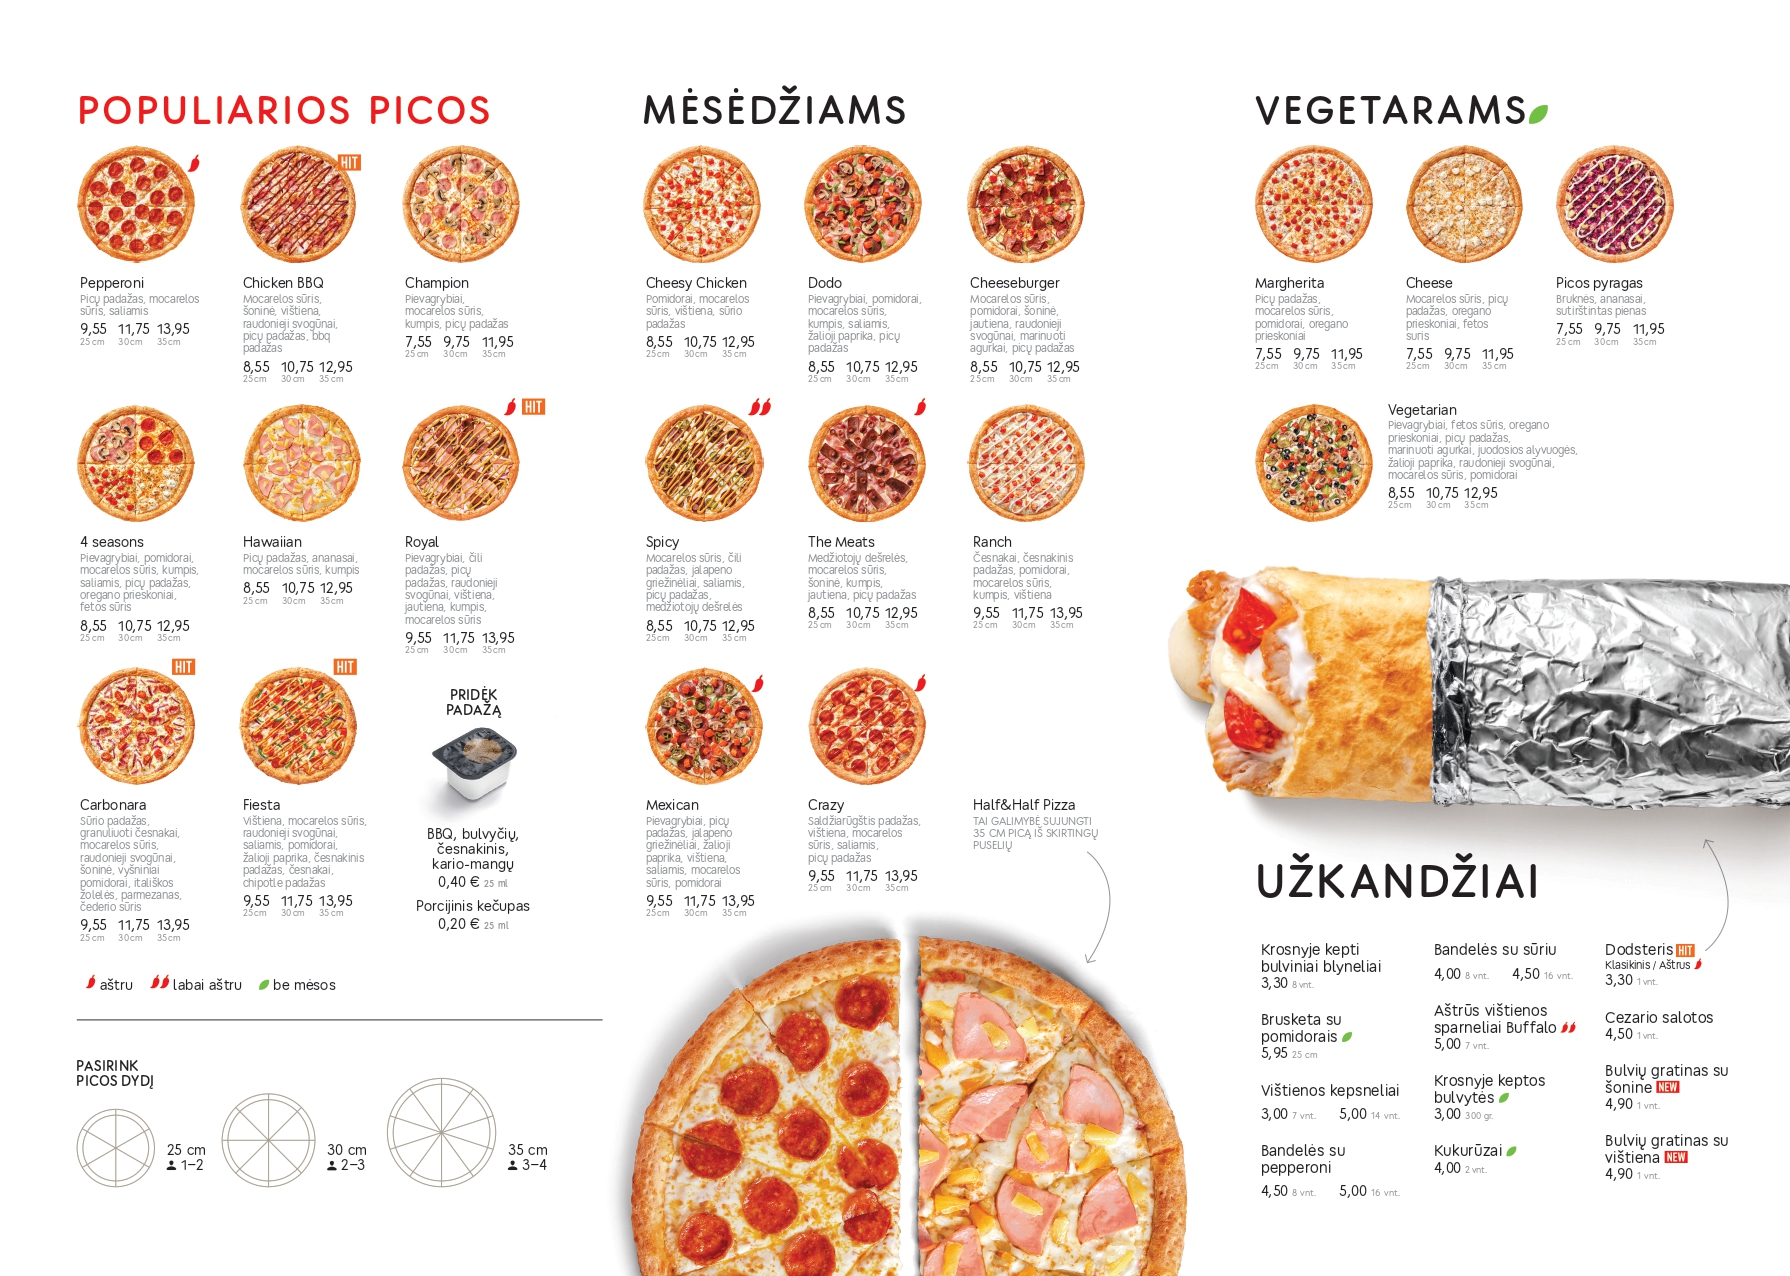 сколько стоит пицца пепперони в додо фото 104